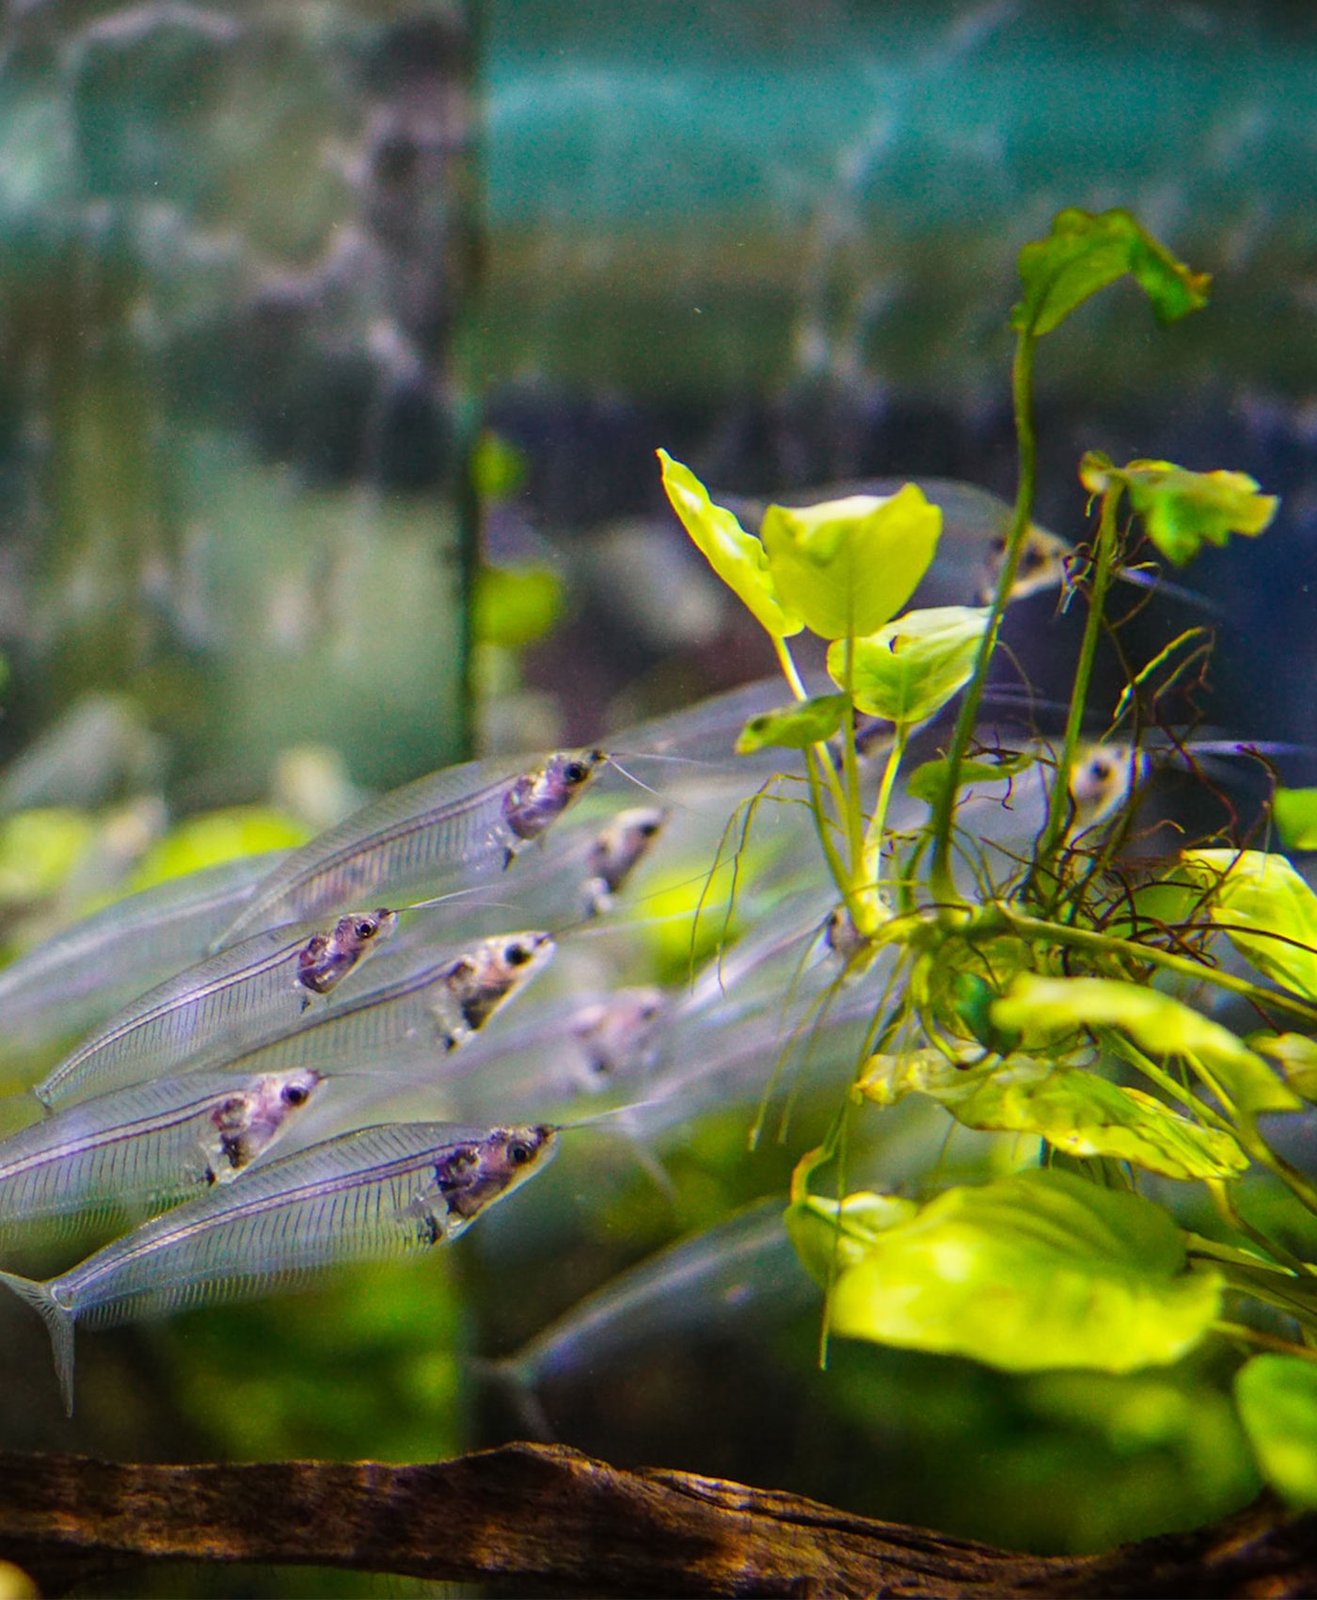 Banc de poissons transparents dans un aquarium